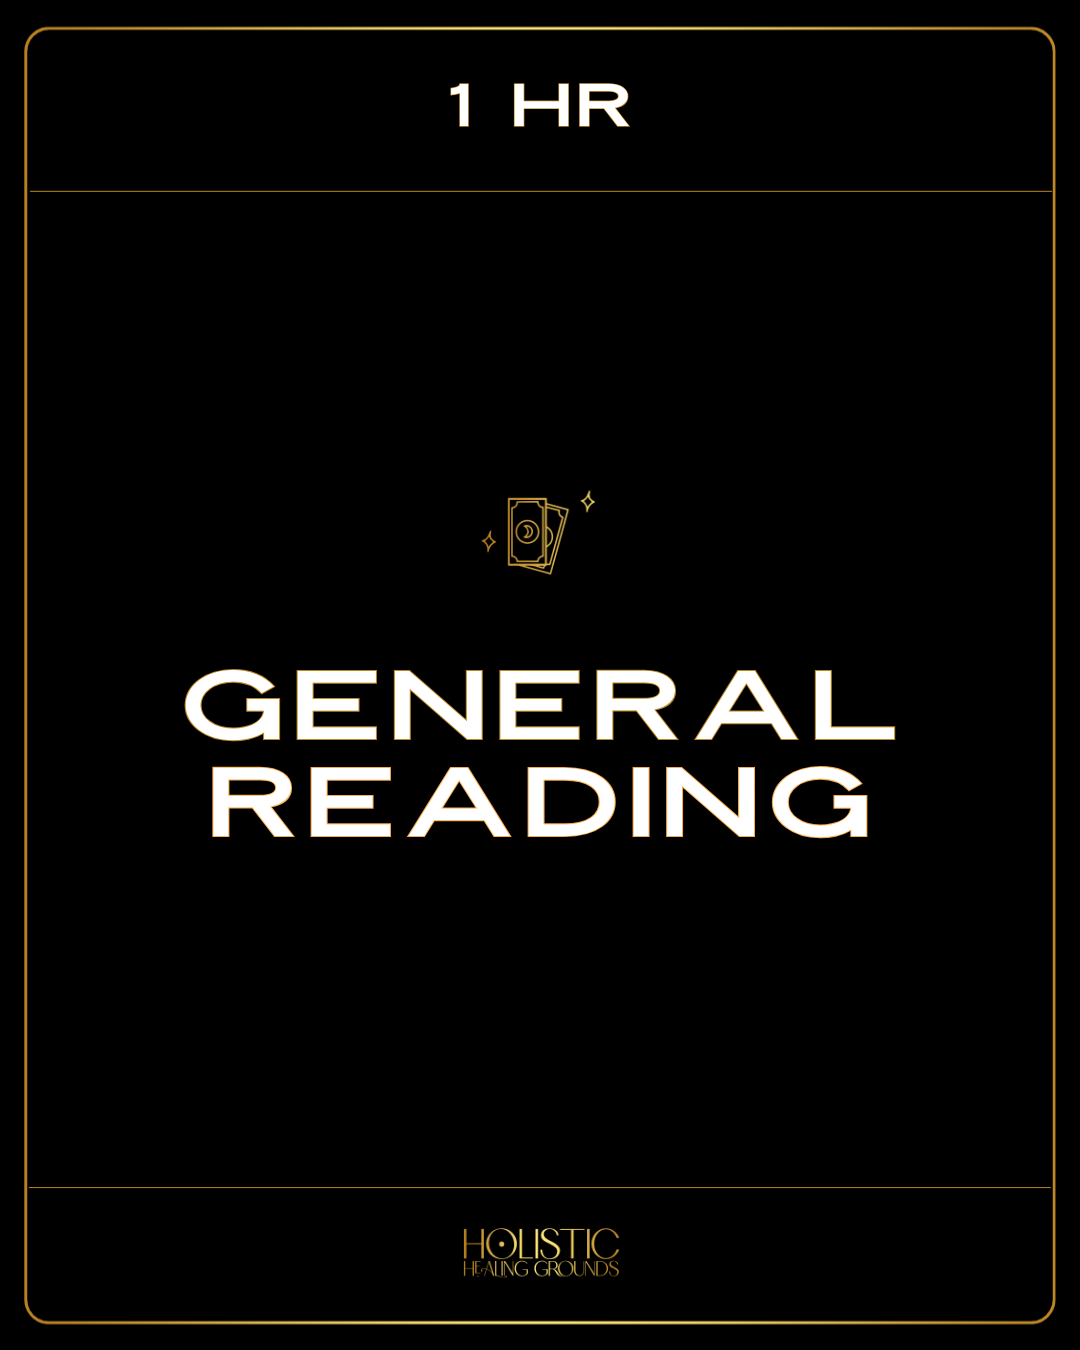 General Reading - 1 HR